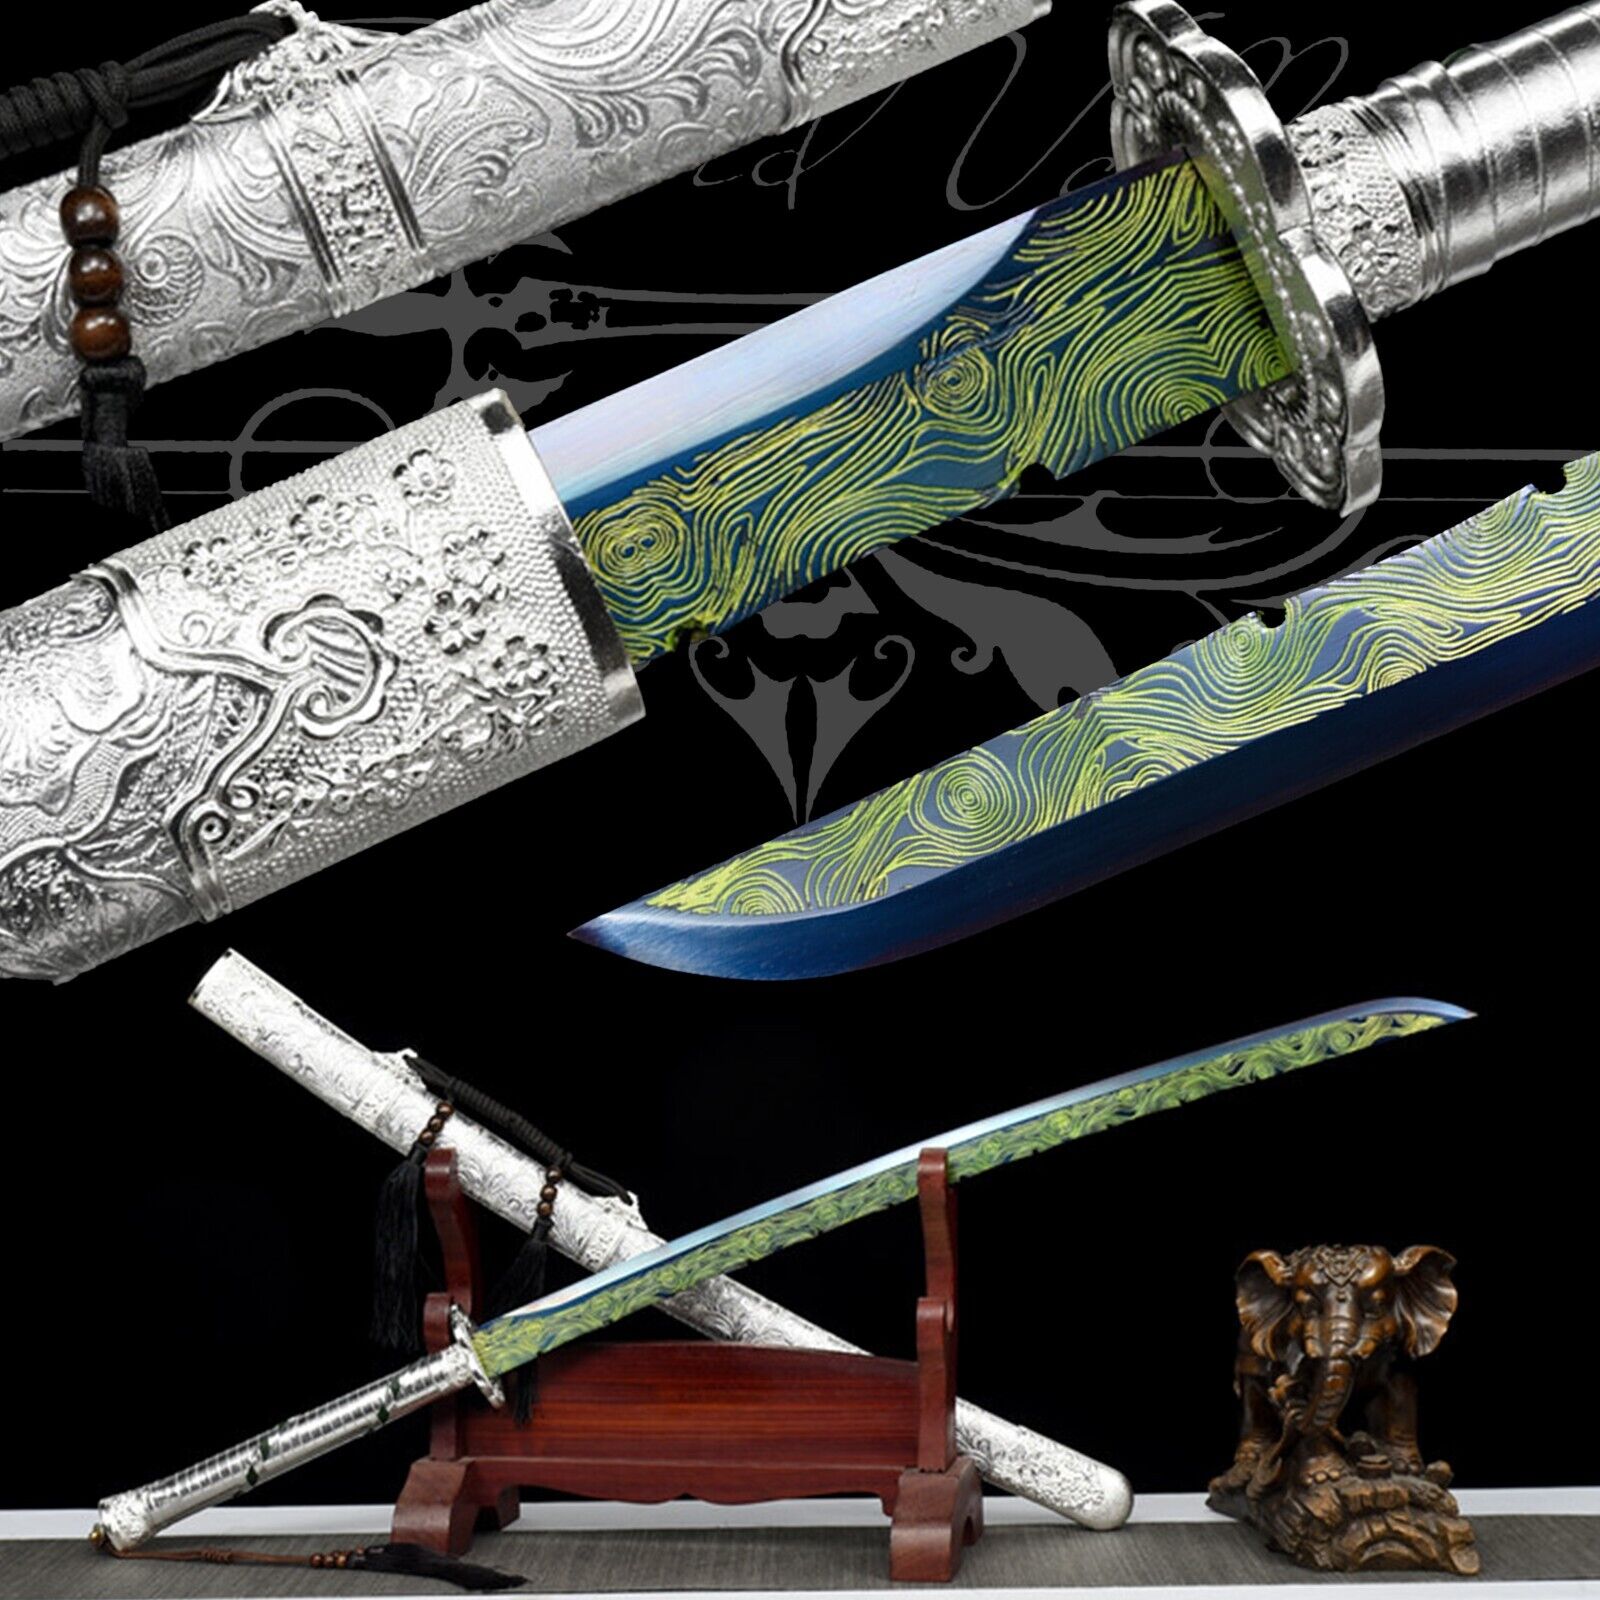 Handmade Katana/Manganese Steel/Real Sword/Full Tang/Real/High-Quality Blade